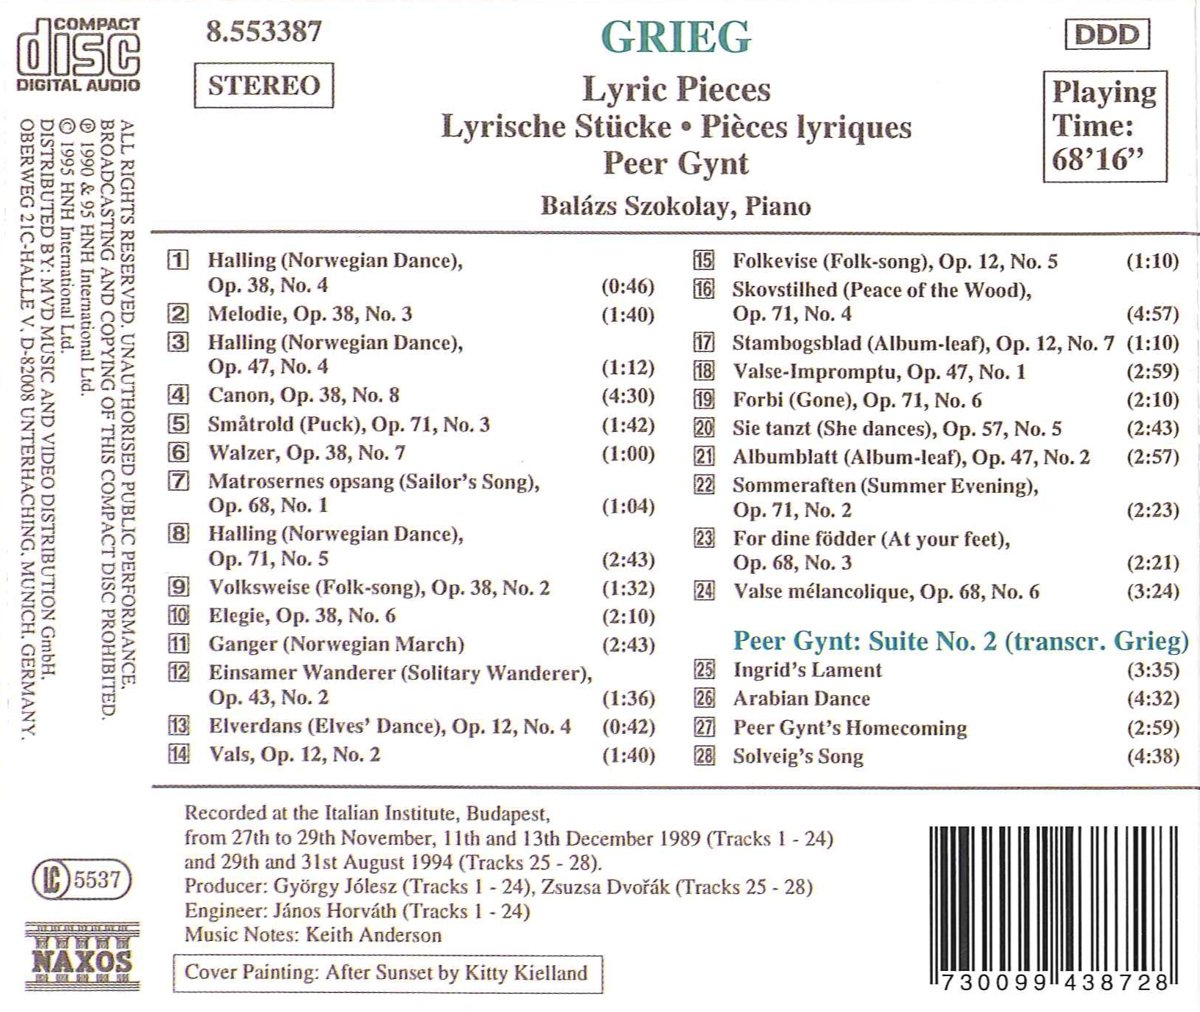 GRIEG: Lyric Pieces, Peer Gynt - slide-1